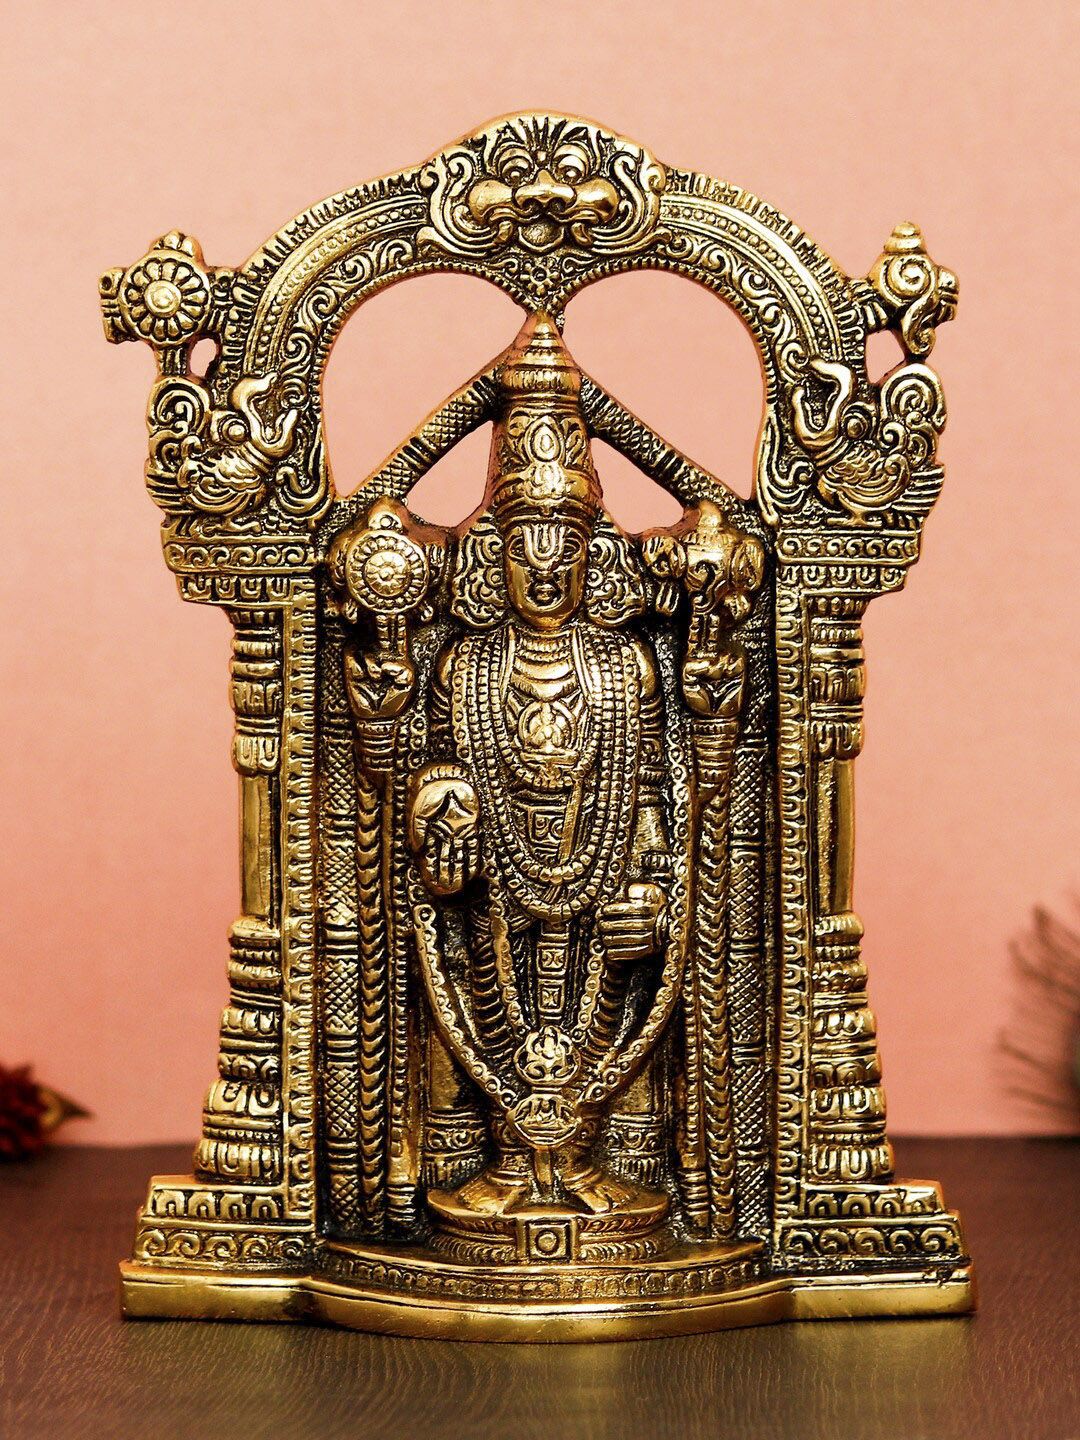 eCraftIndia Gold-Toned Handcrafted Lord Balaji Idol Decorative Showpiece Price in India